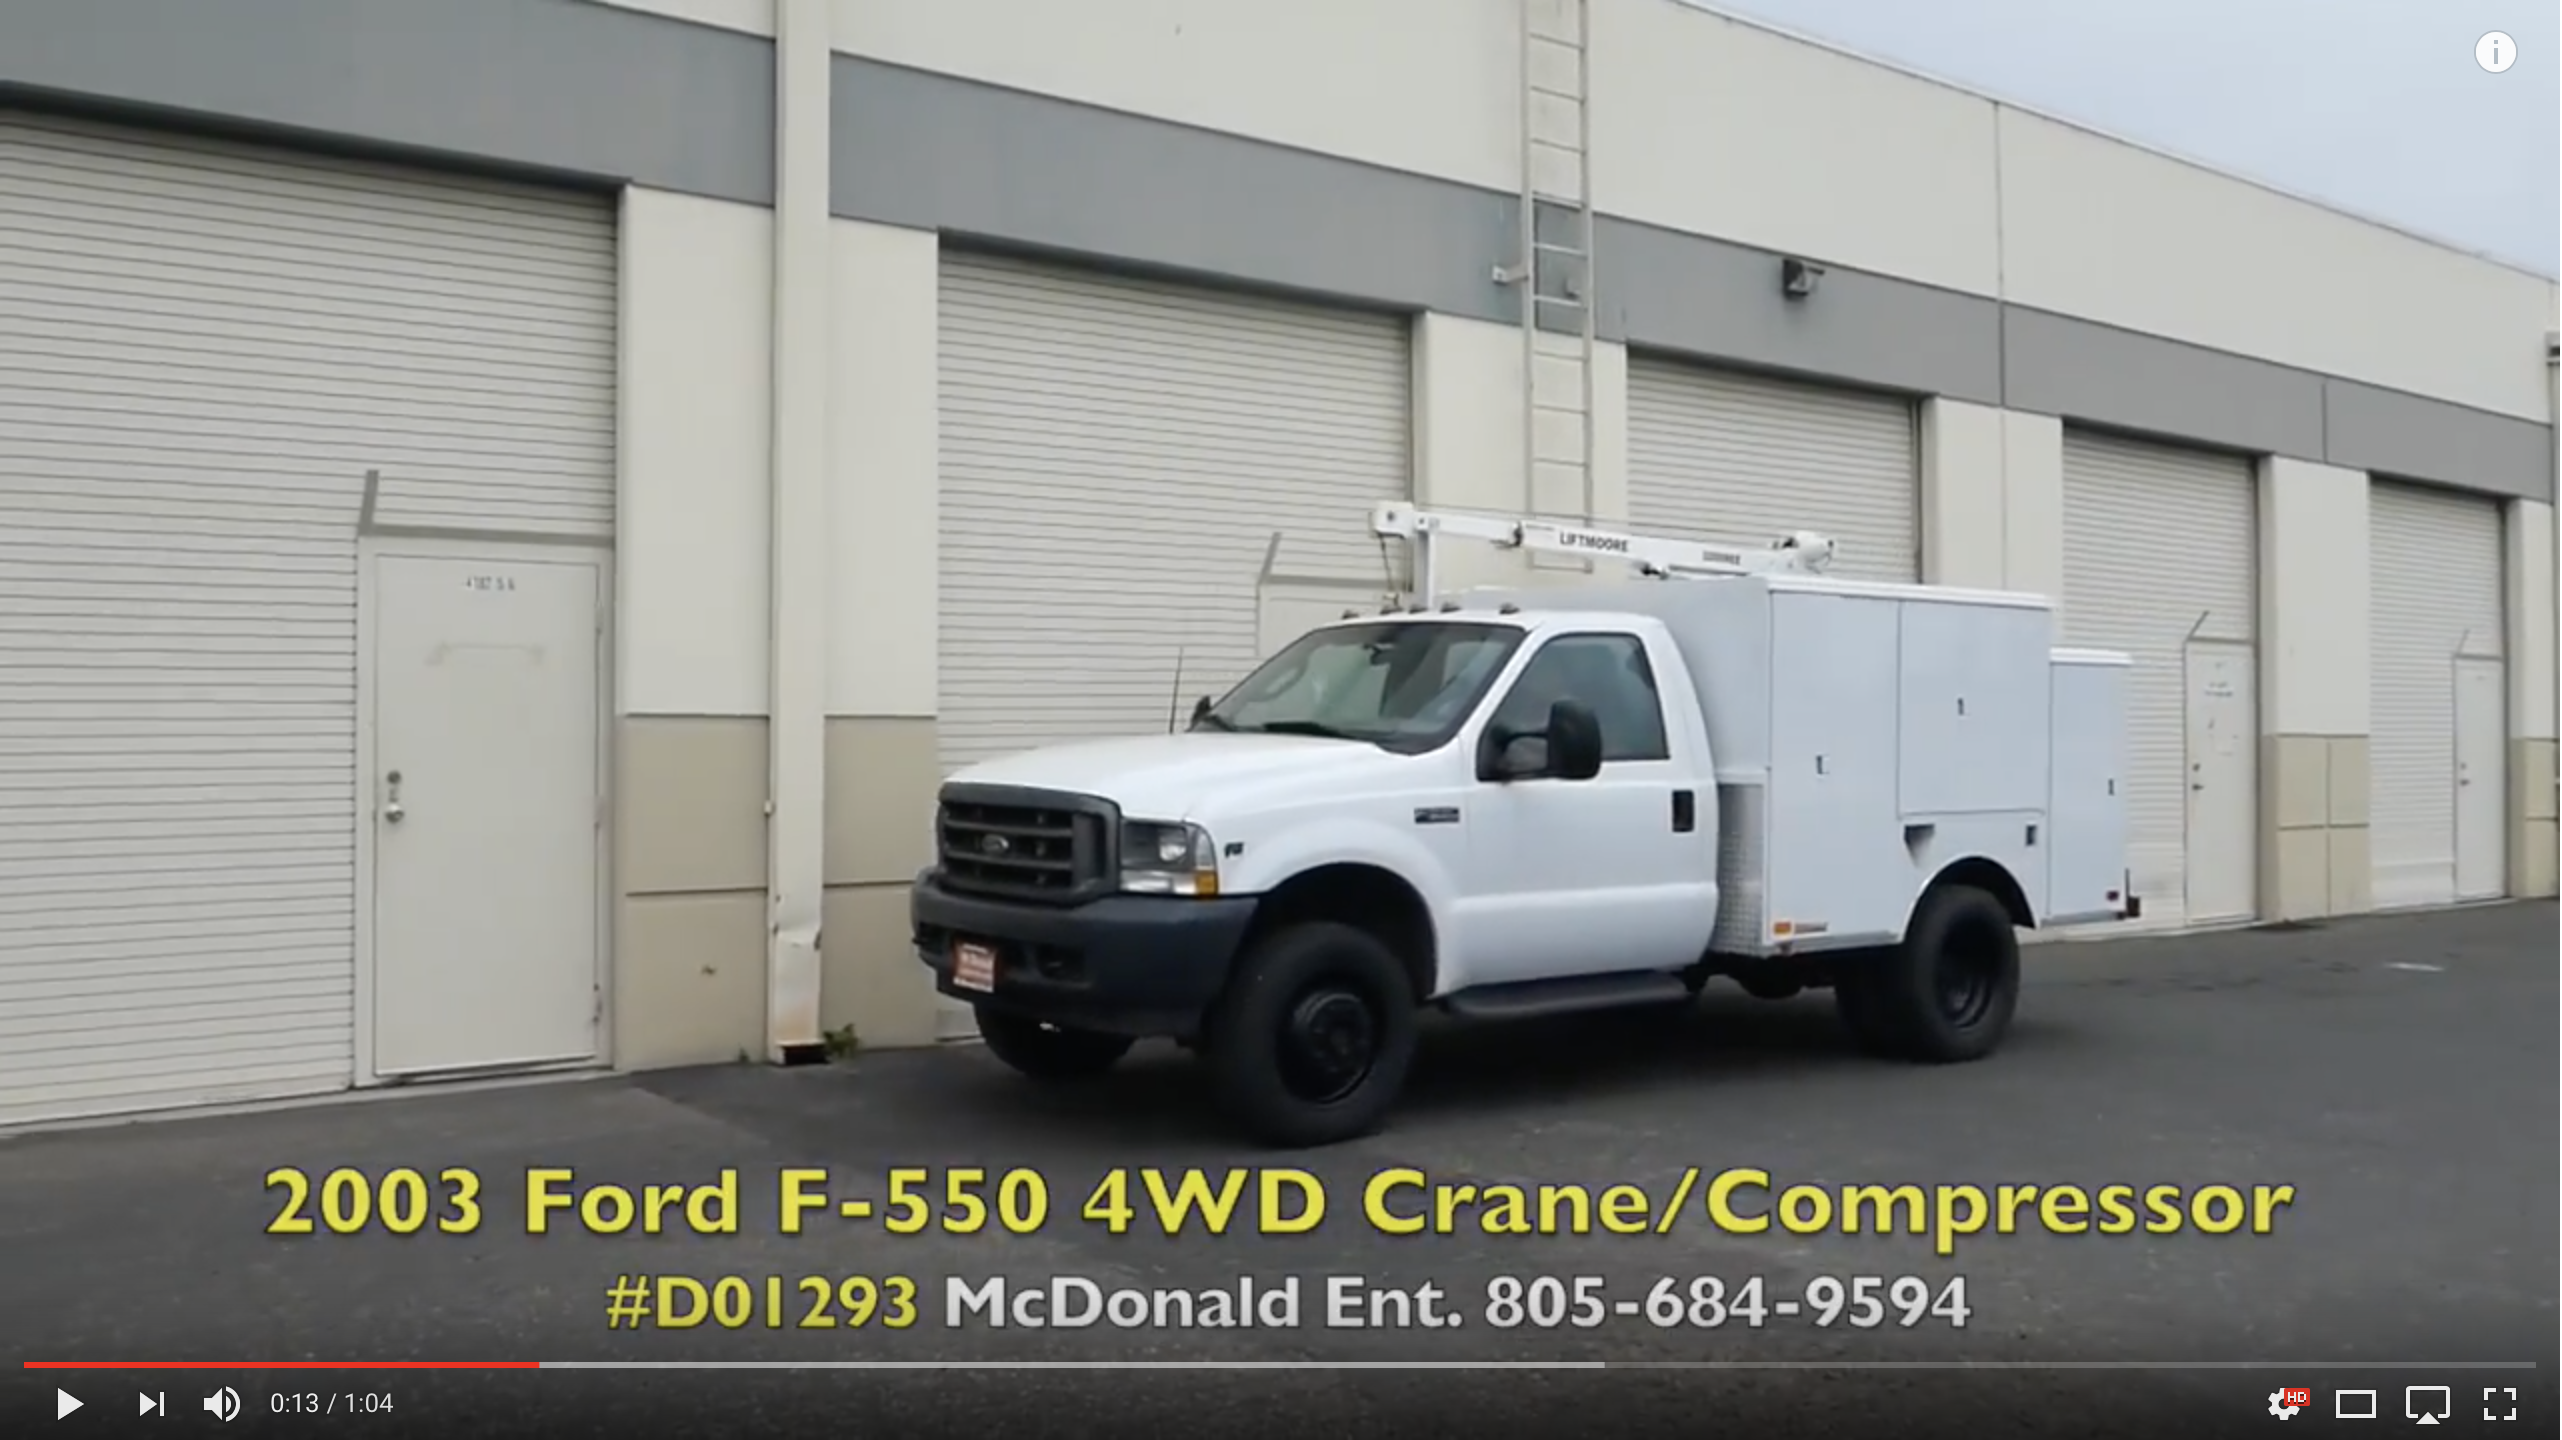 2003 Ford F-550 4 x 4 Servive Truck w/ Crane & Air Compressor on YouTube